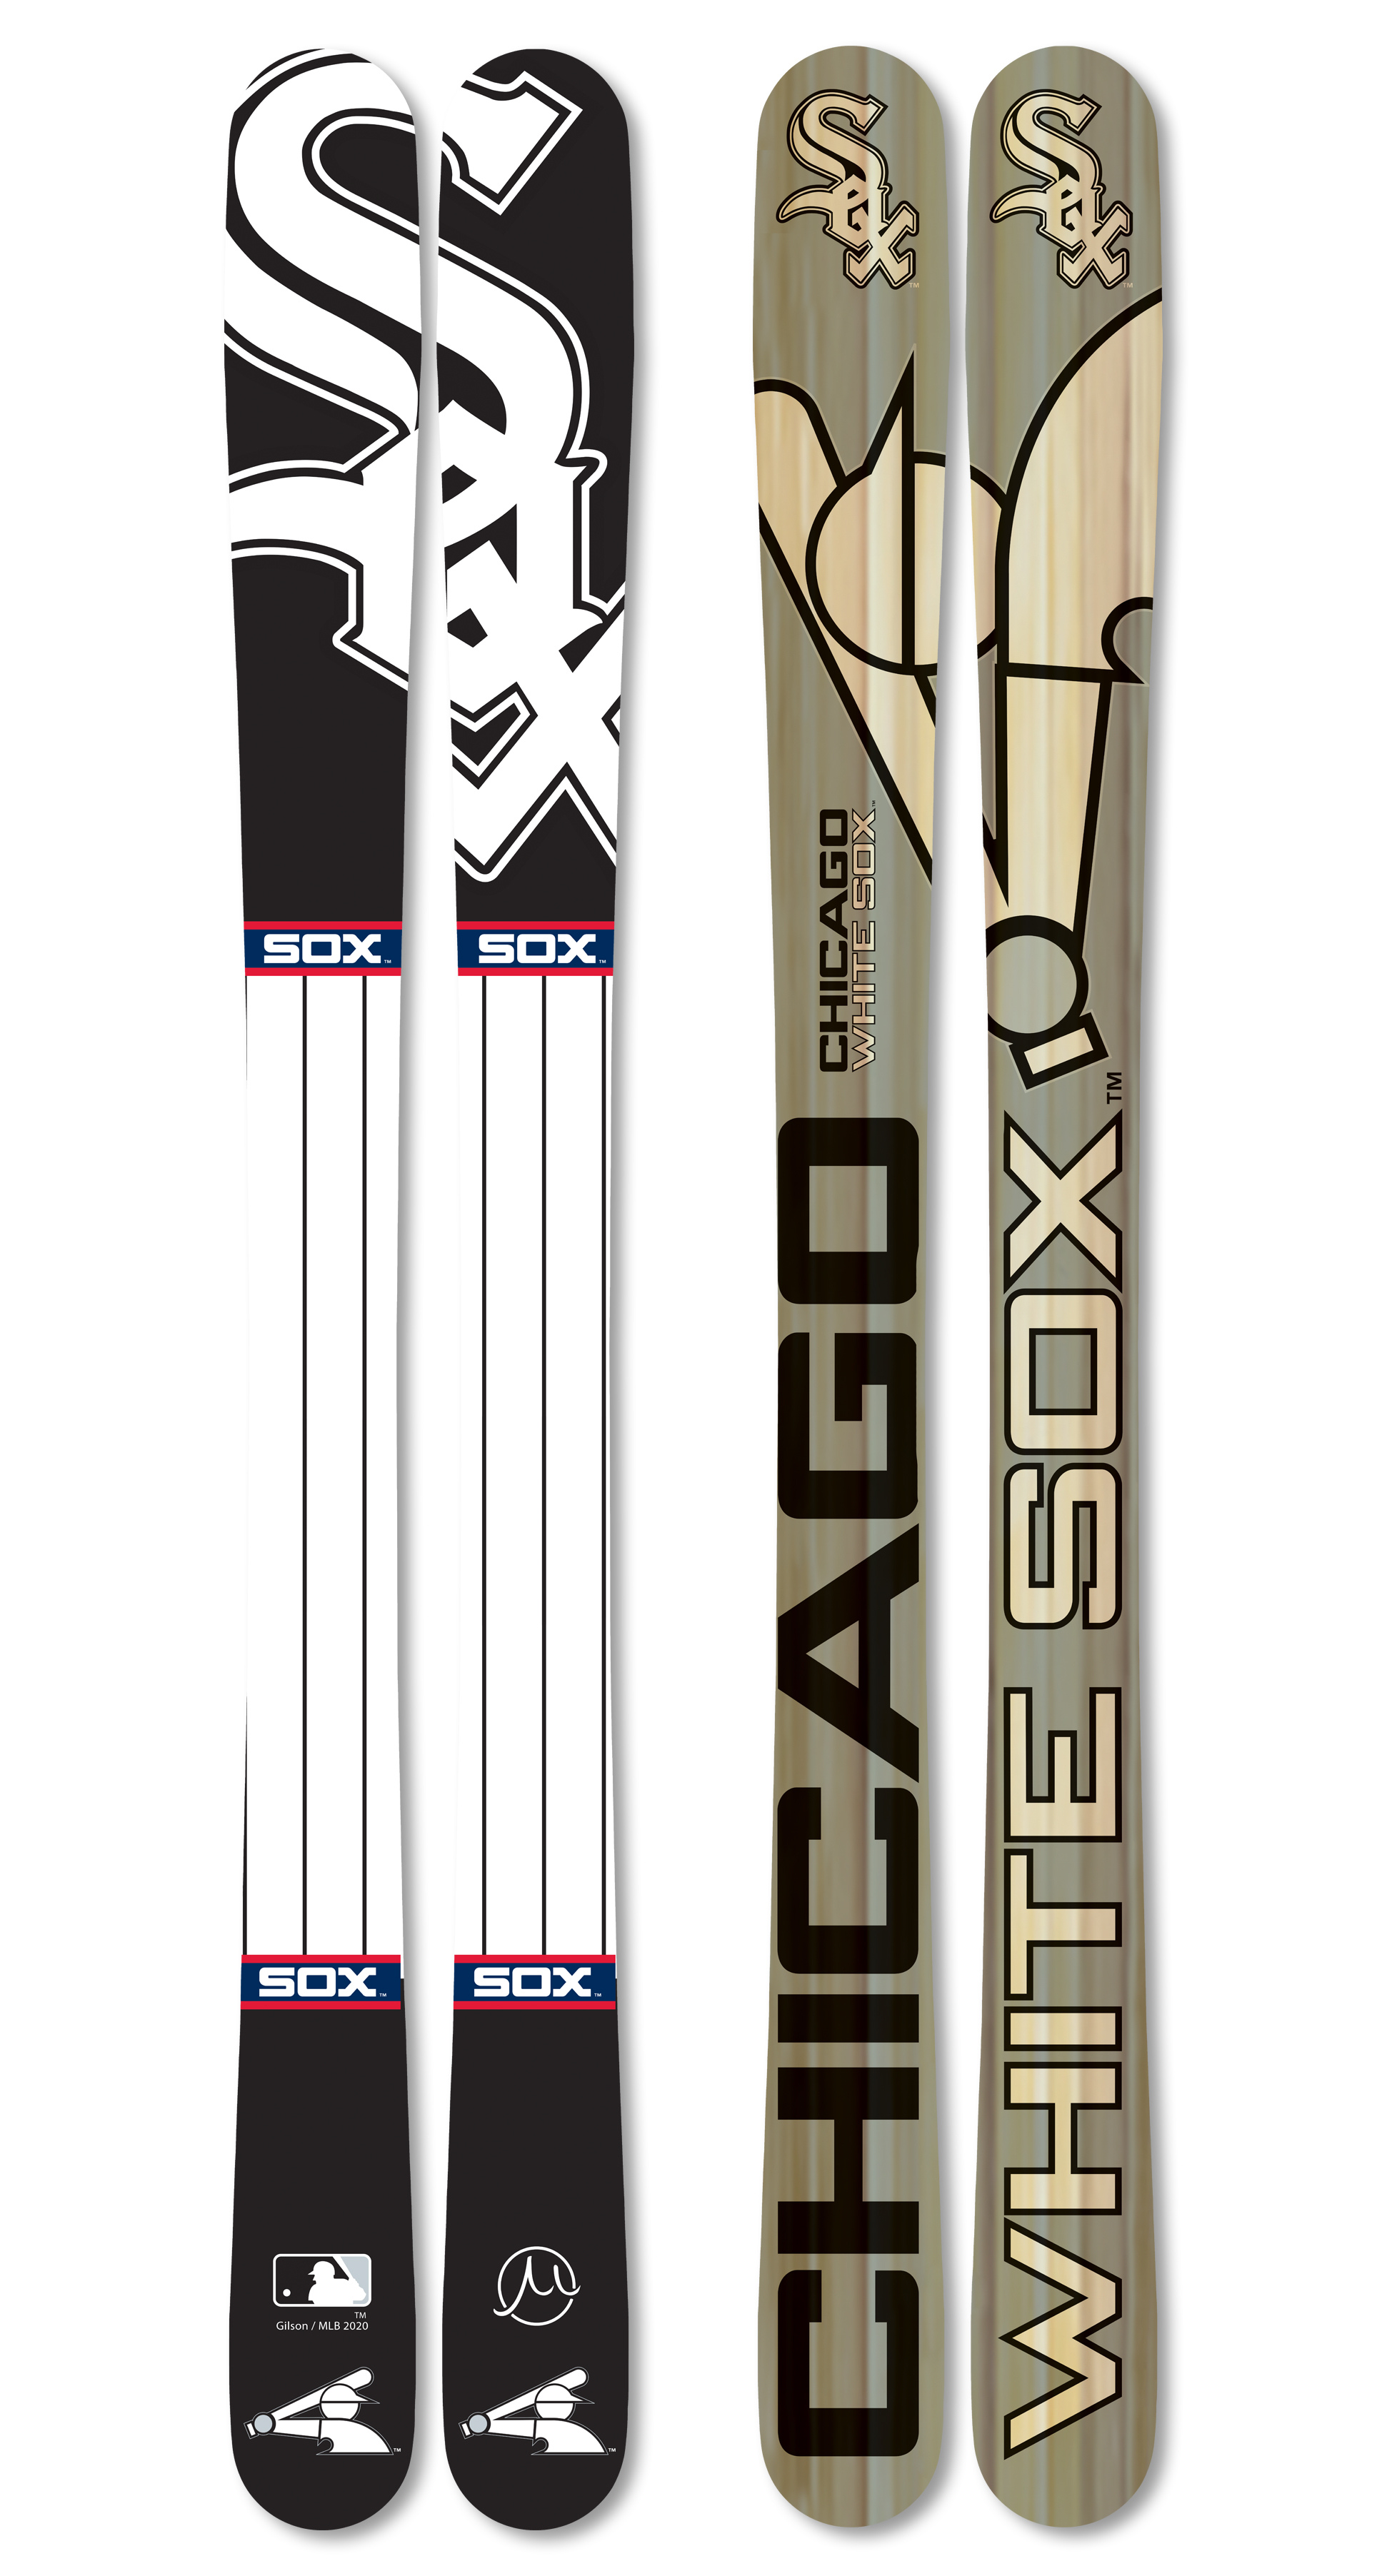 Mlb chicago white sox skis large